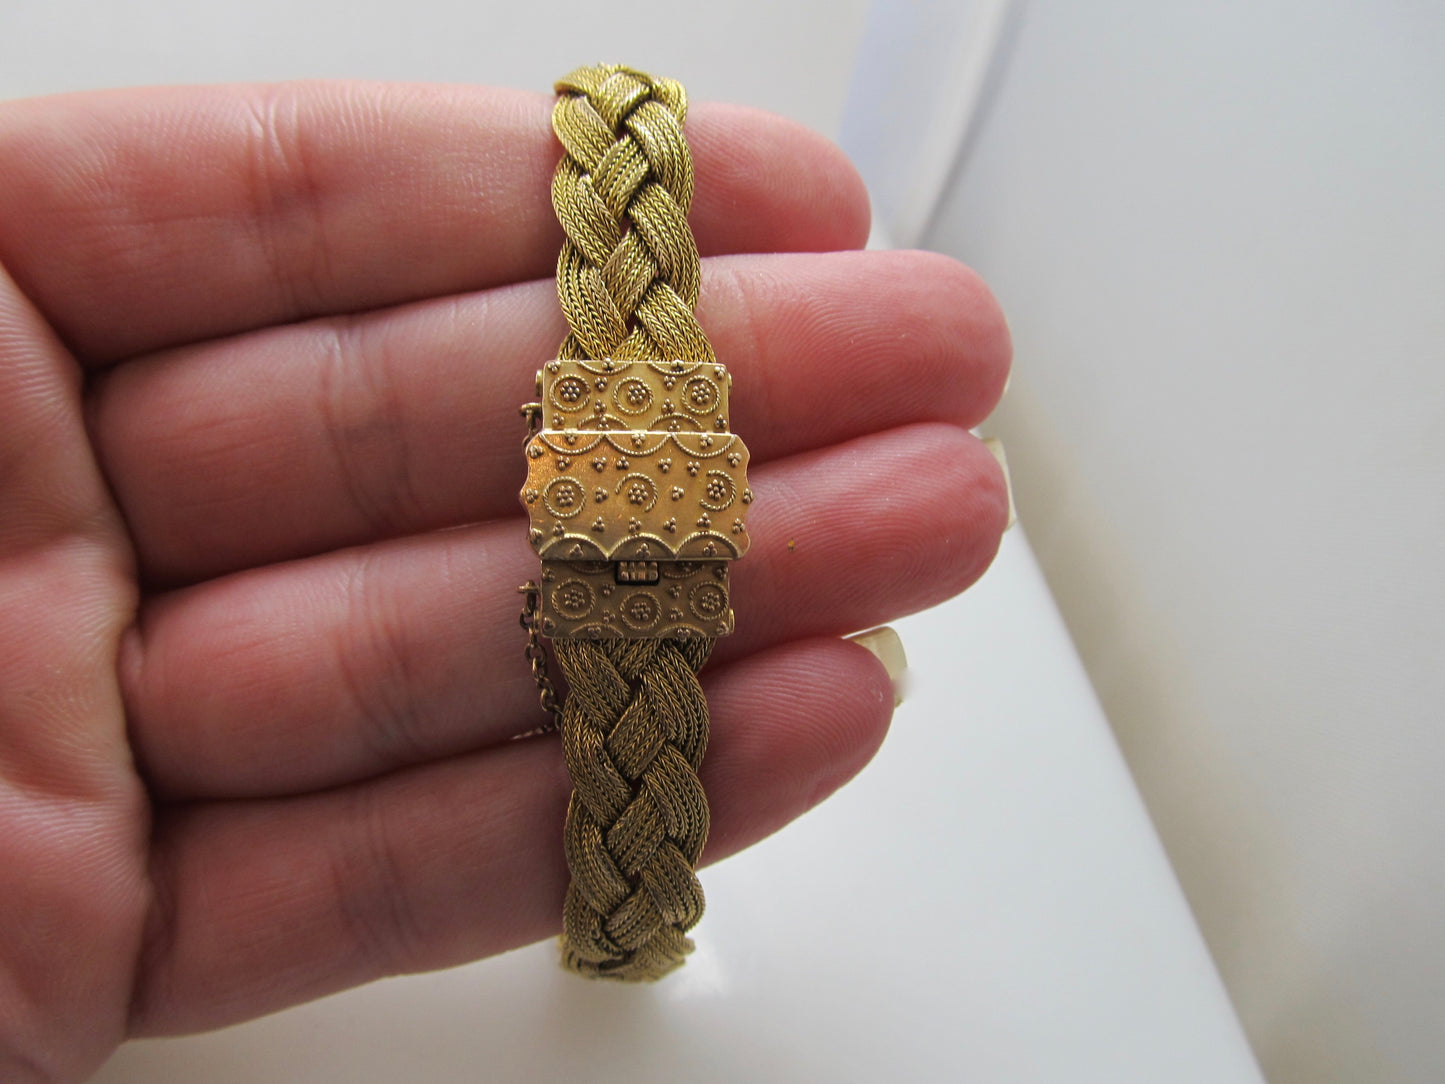 Antique woven 14k gold bracelet